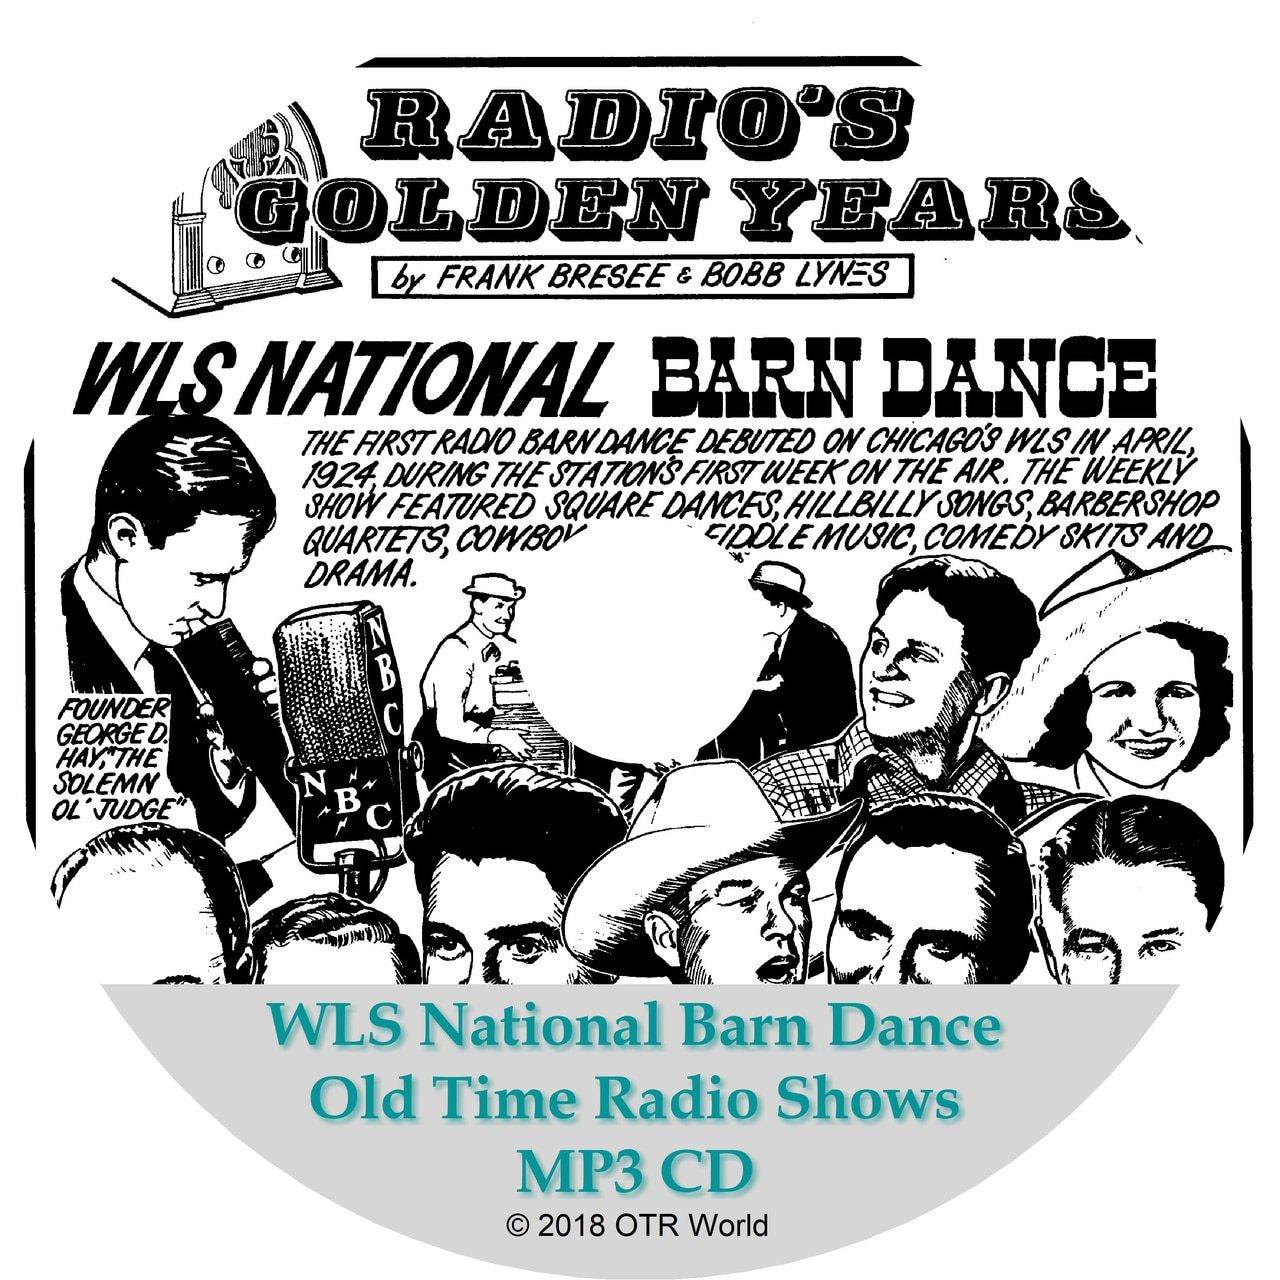 WLS National Barn Dance Old Time Radio Shows 12 Episodes On MP3 CD OTR OTRS - OTR World